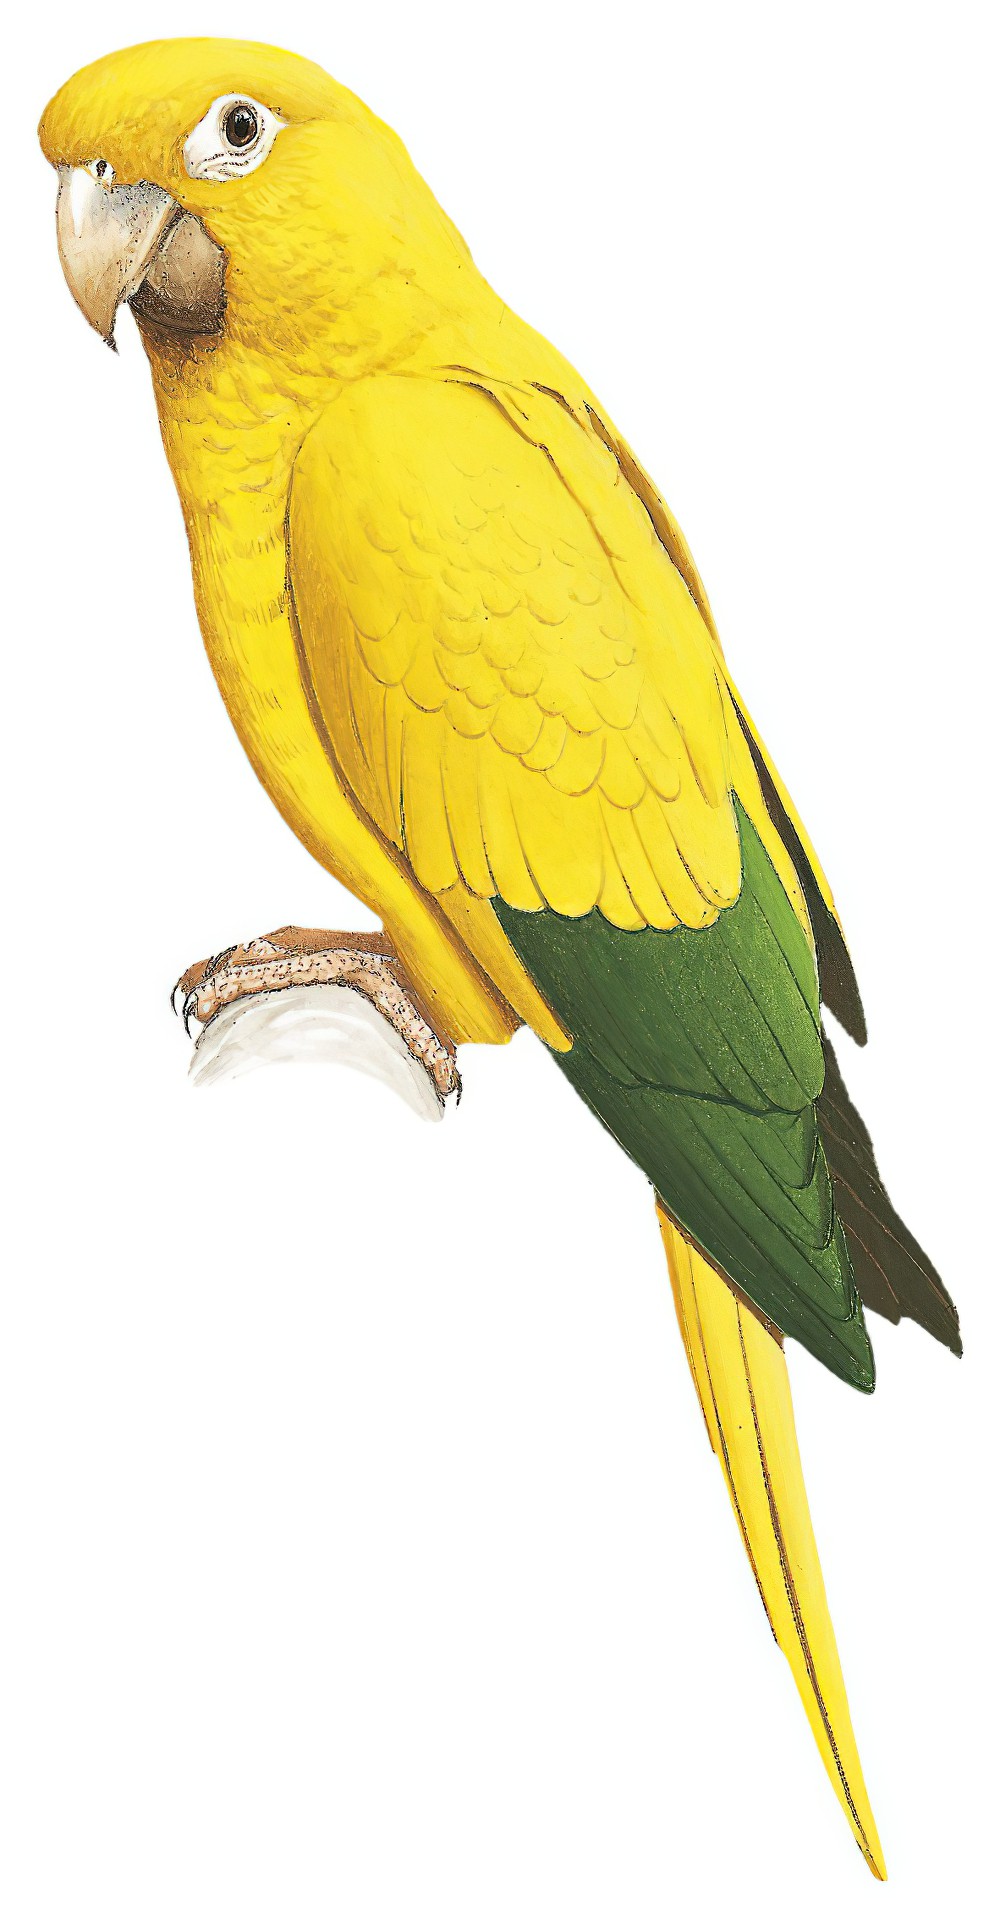 Golden Parakeet / Guaruba guarouba